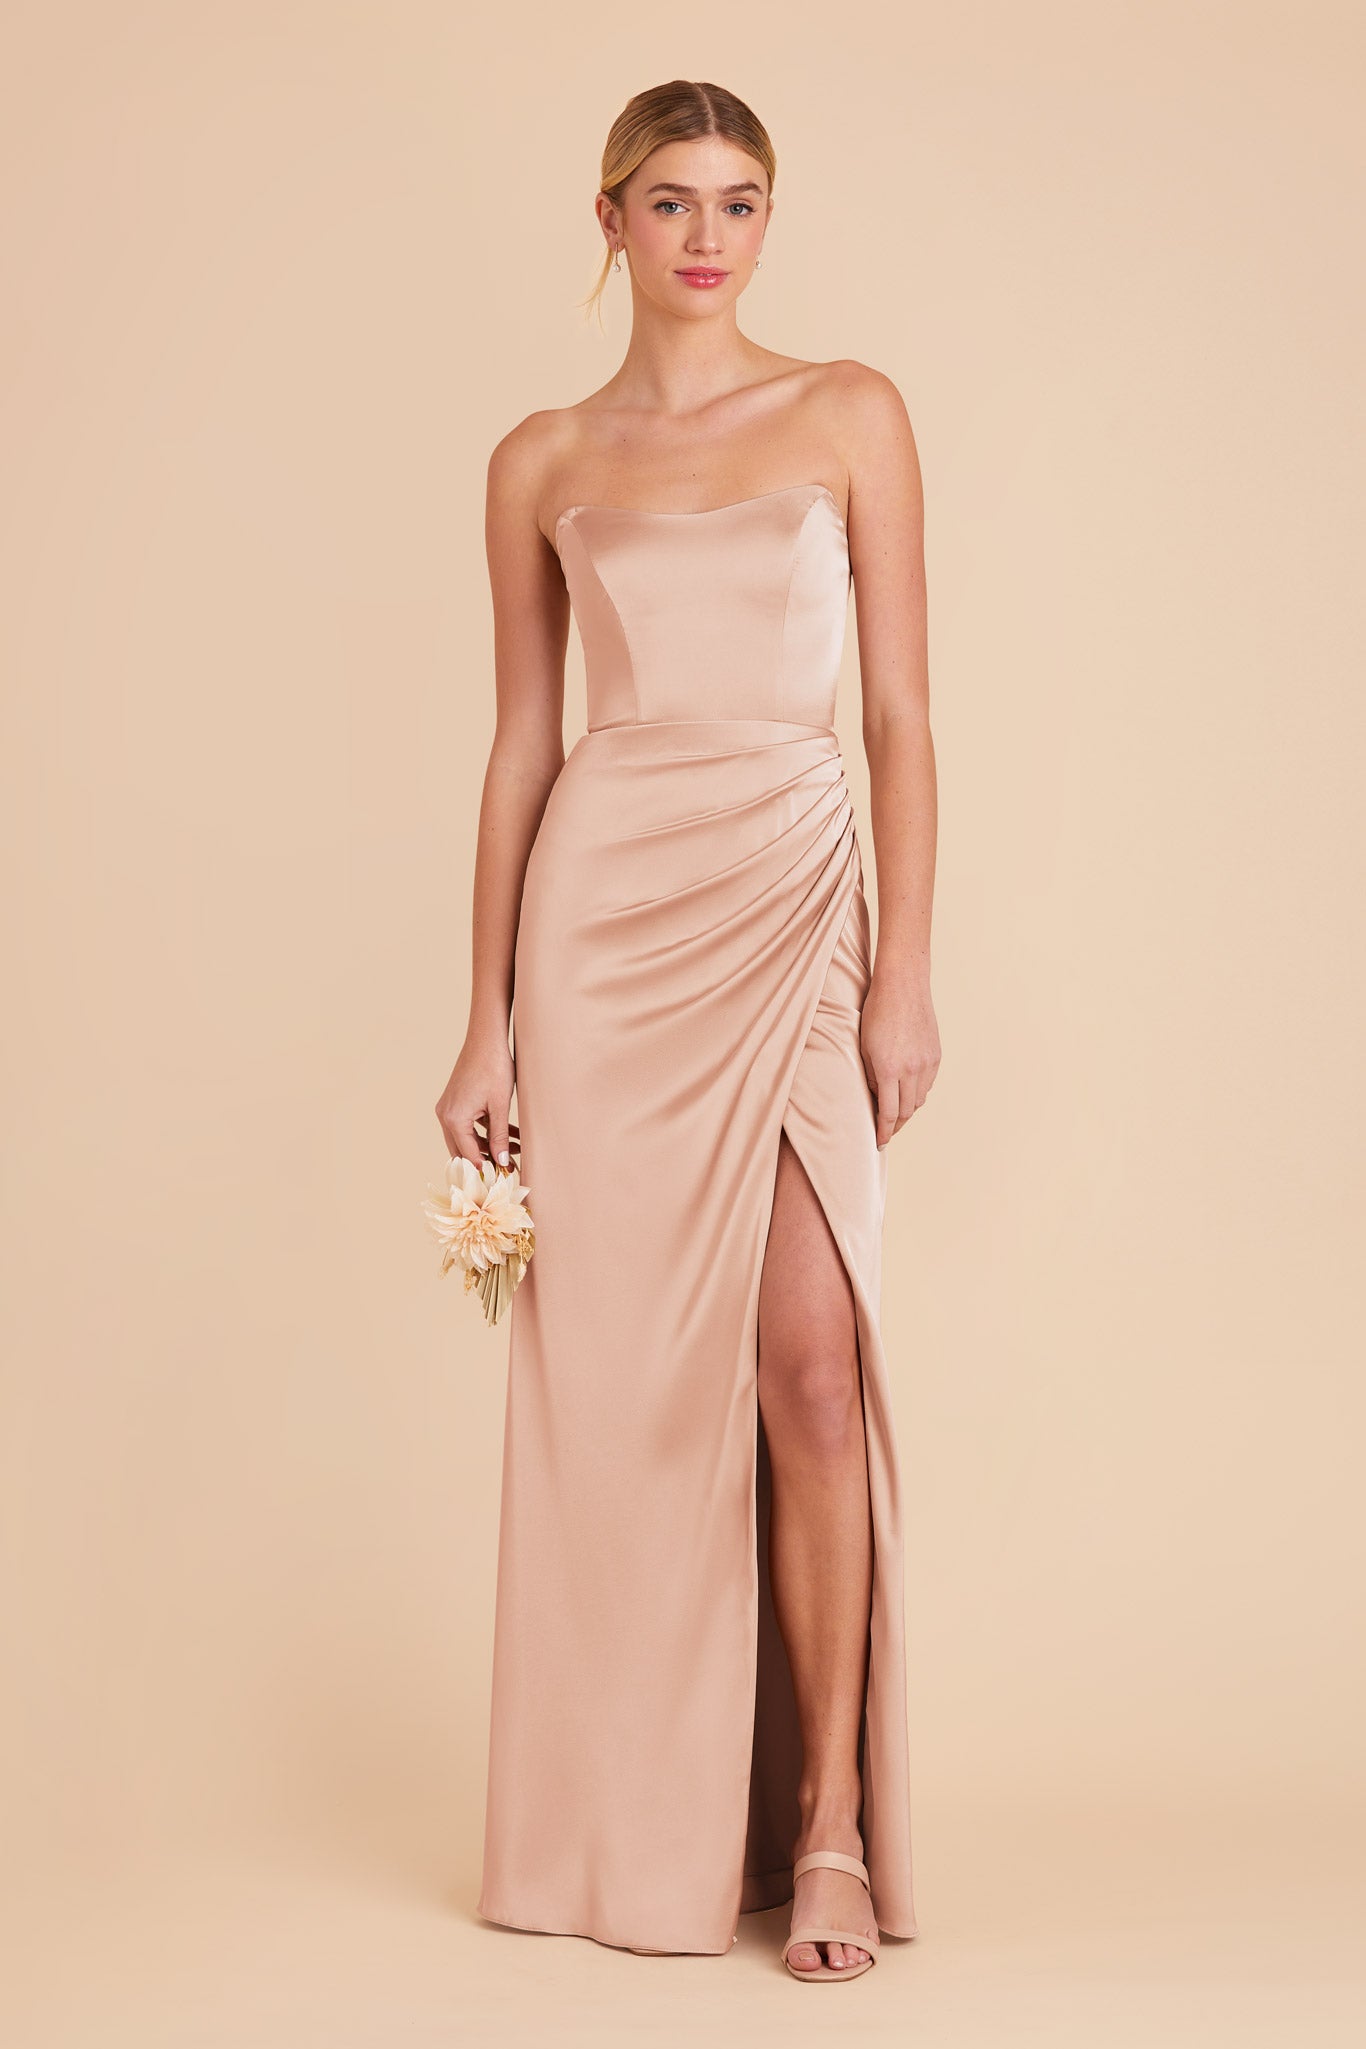 Rose Gold Anne Matte Satin Dress by Birdy Grey